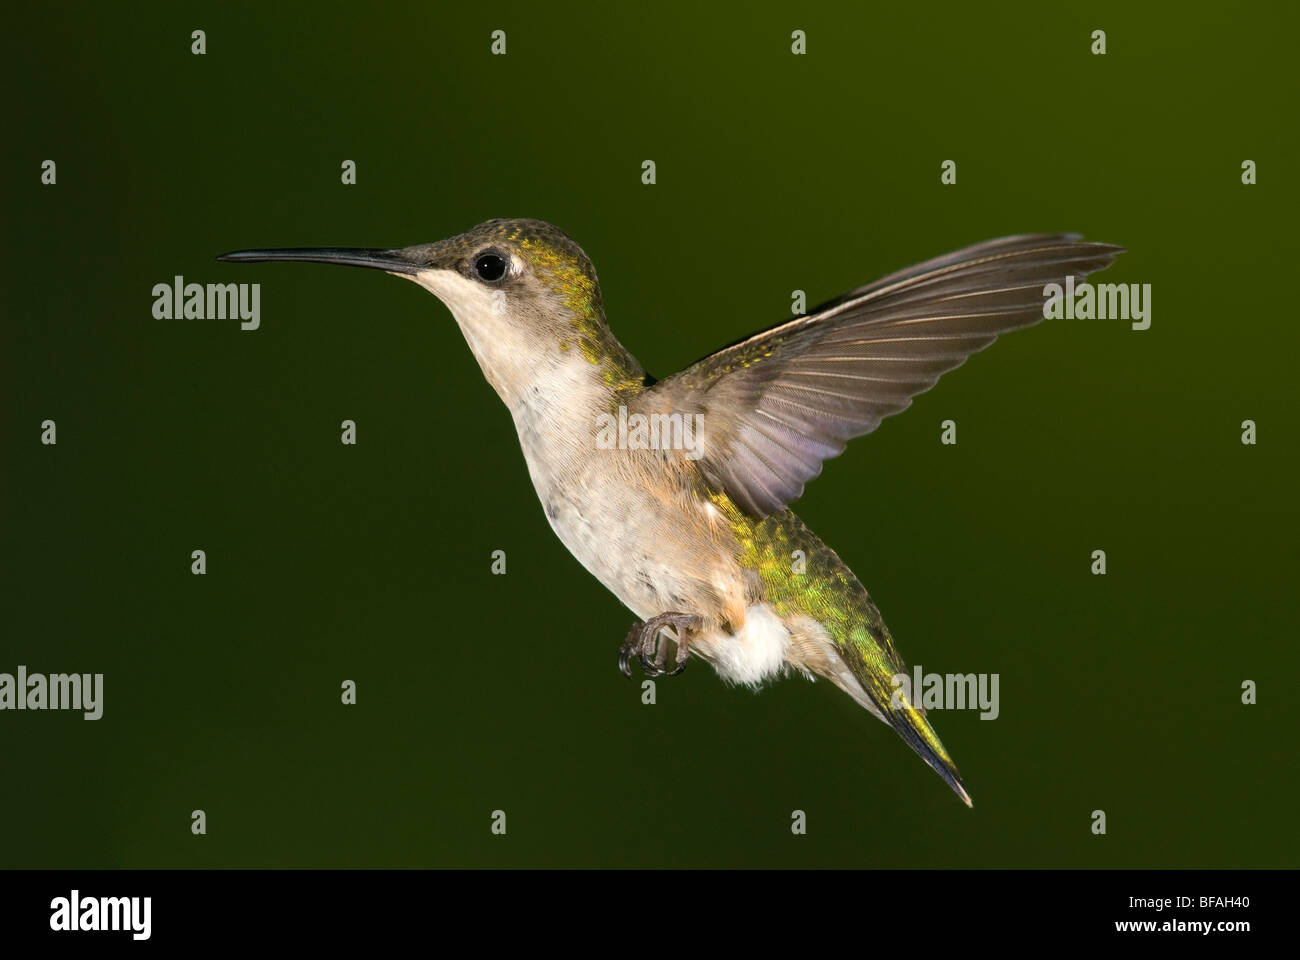 Esta es una hembra Ruby-throated hummingbird en vuelo cerca de un alimentador. Foto de stock